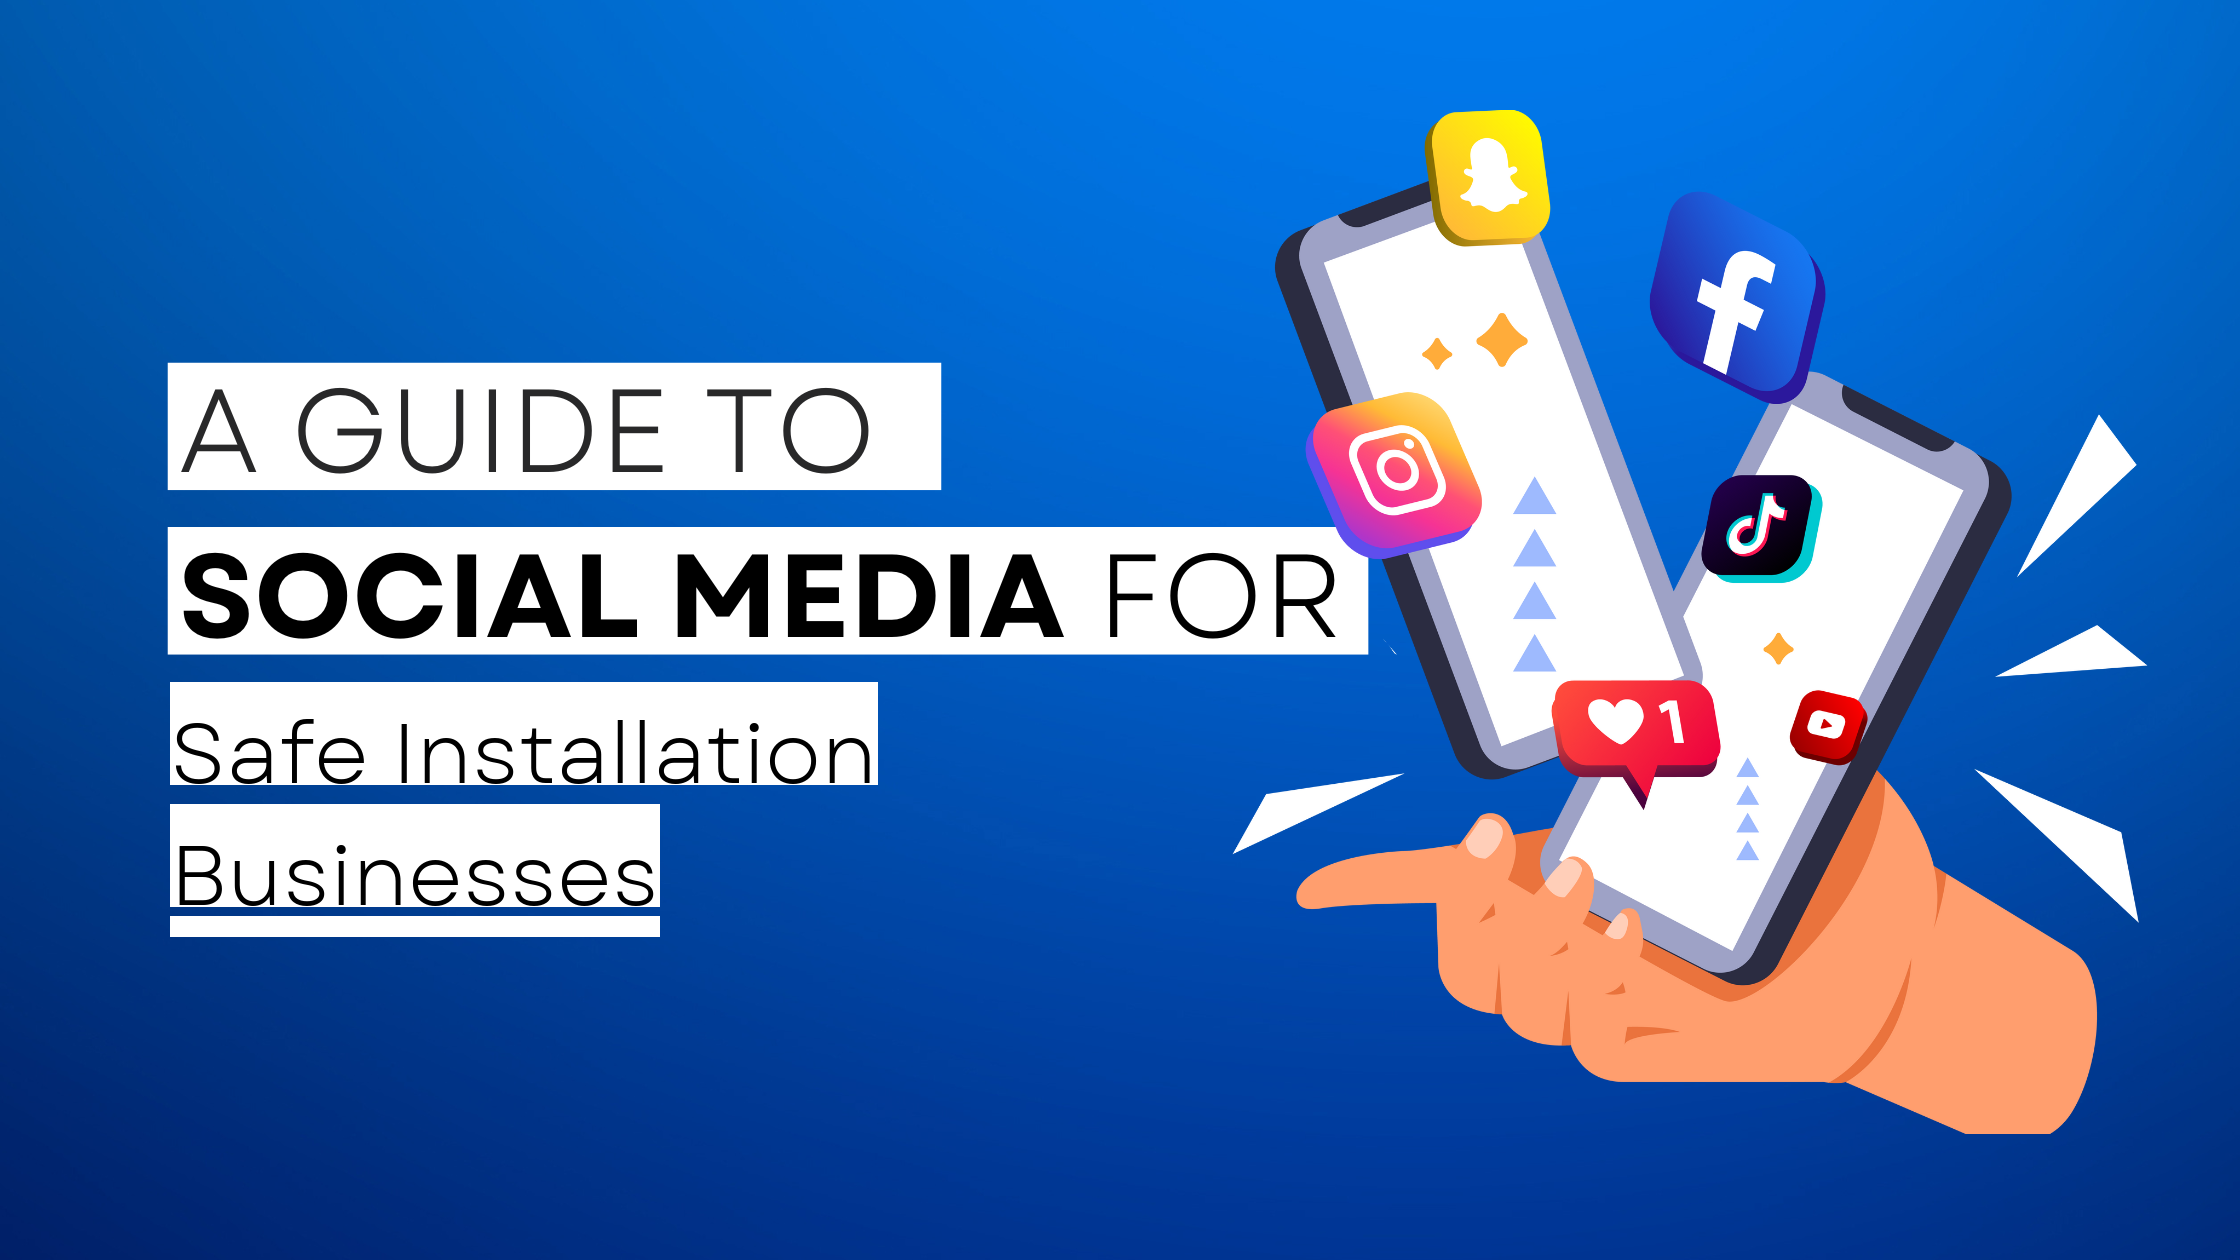 How to start Safe Installation  on social media